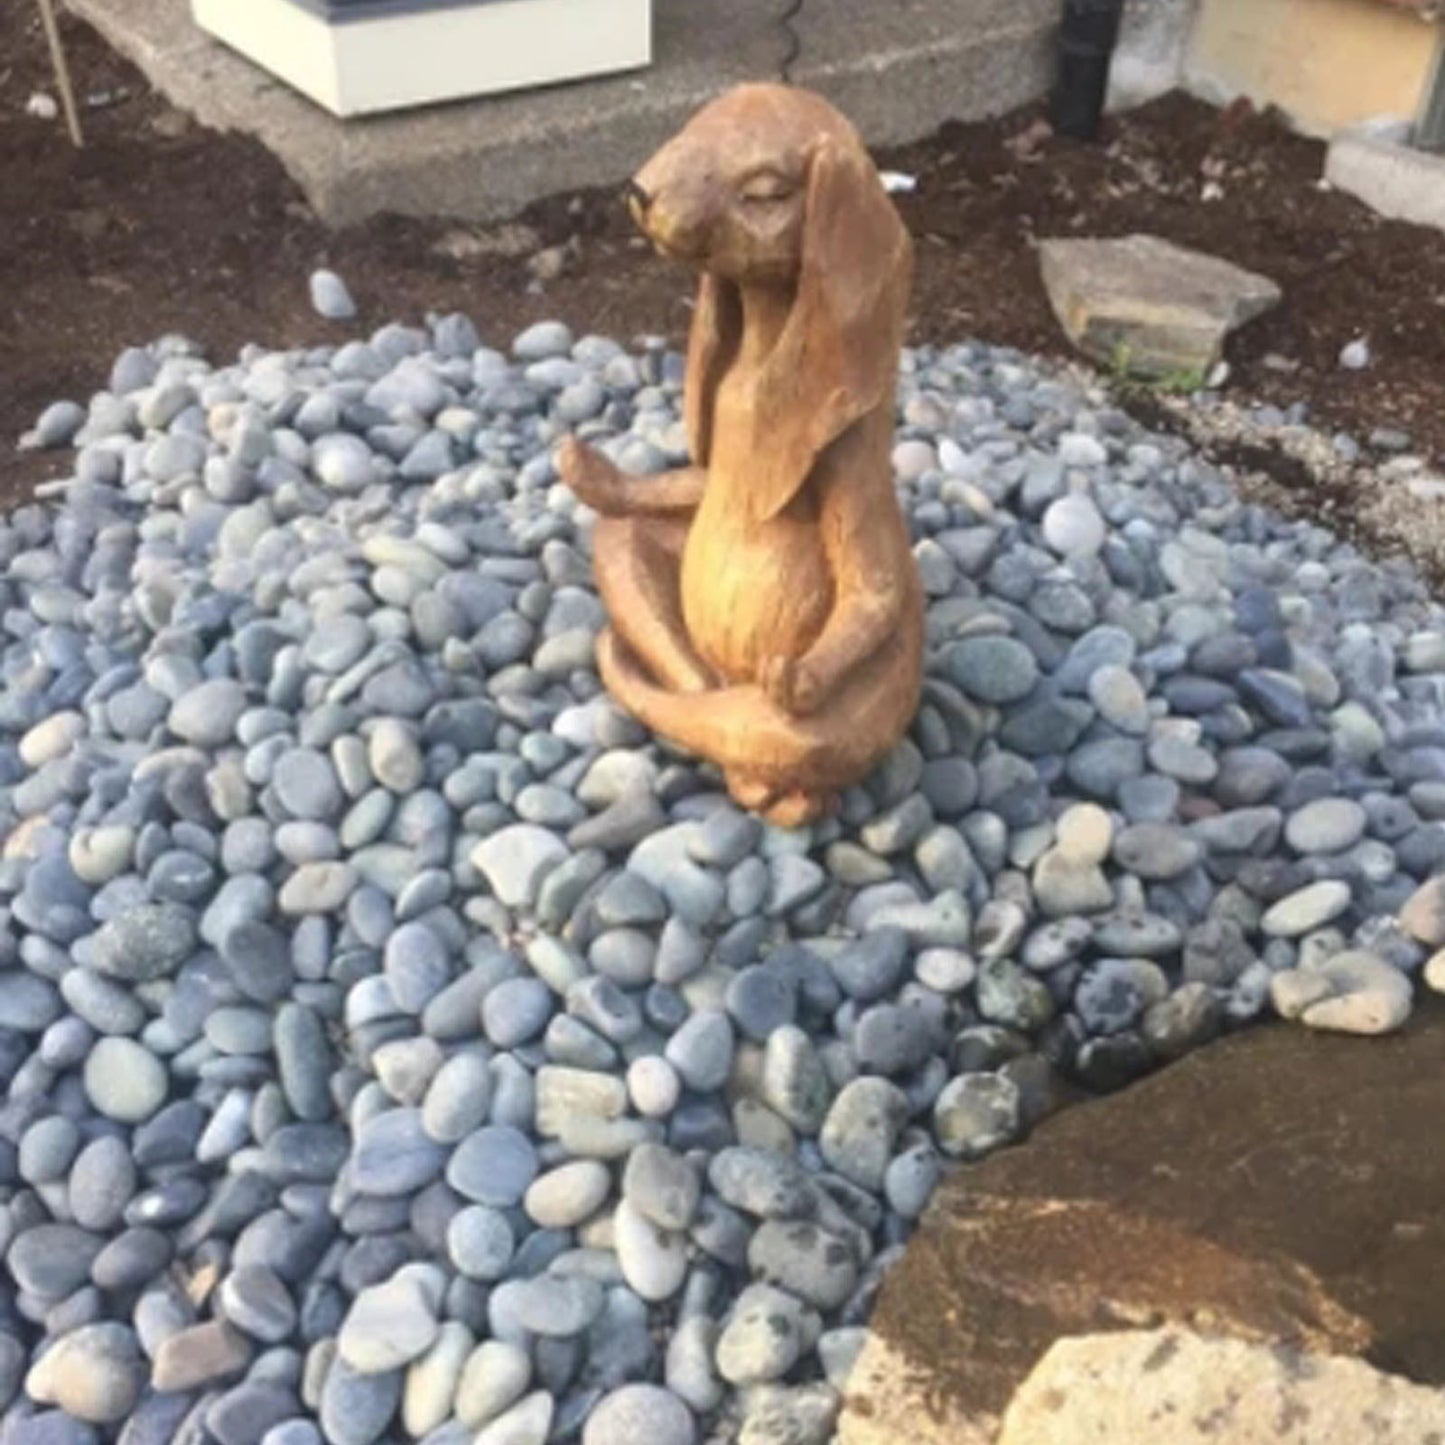 Yoga Space Gift Art Deco Animal Buddha Statue Resin Rabbit Buddha